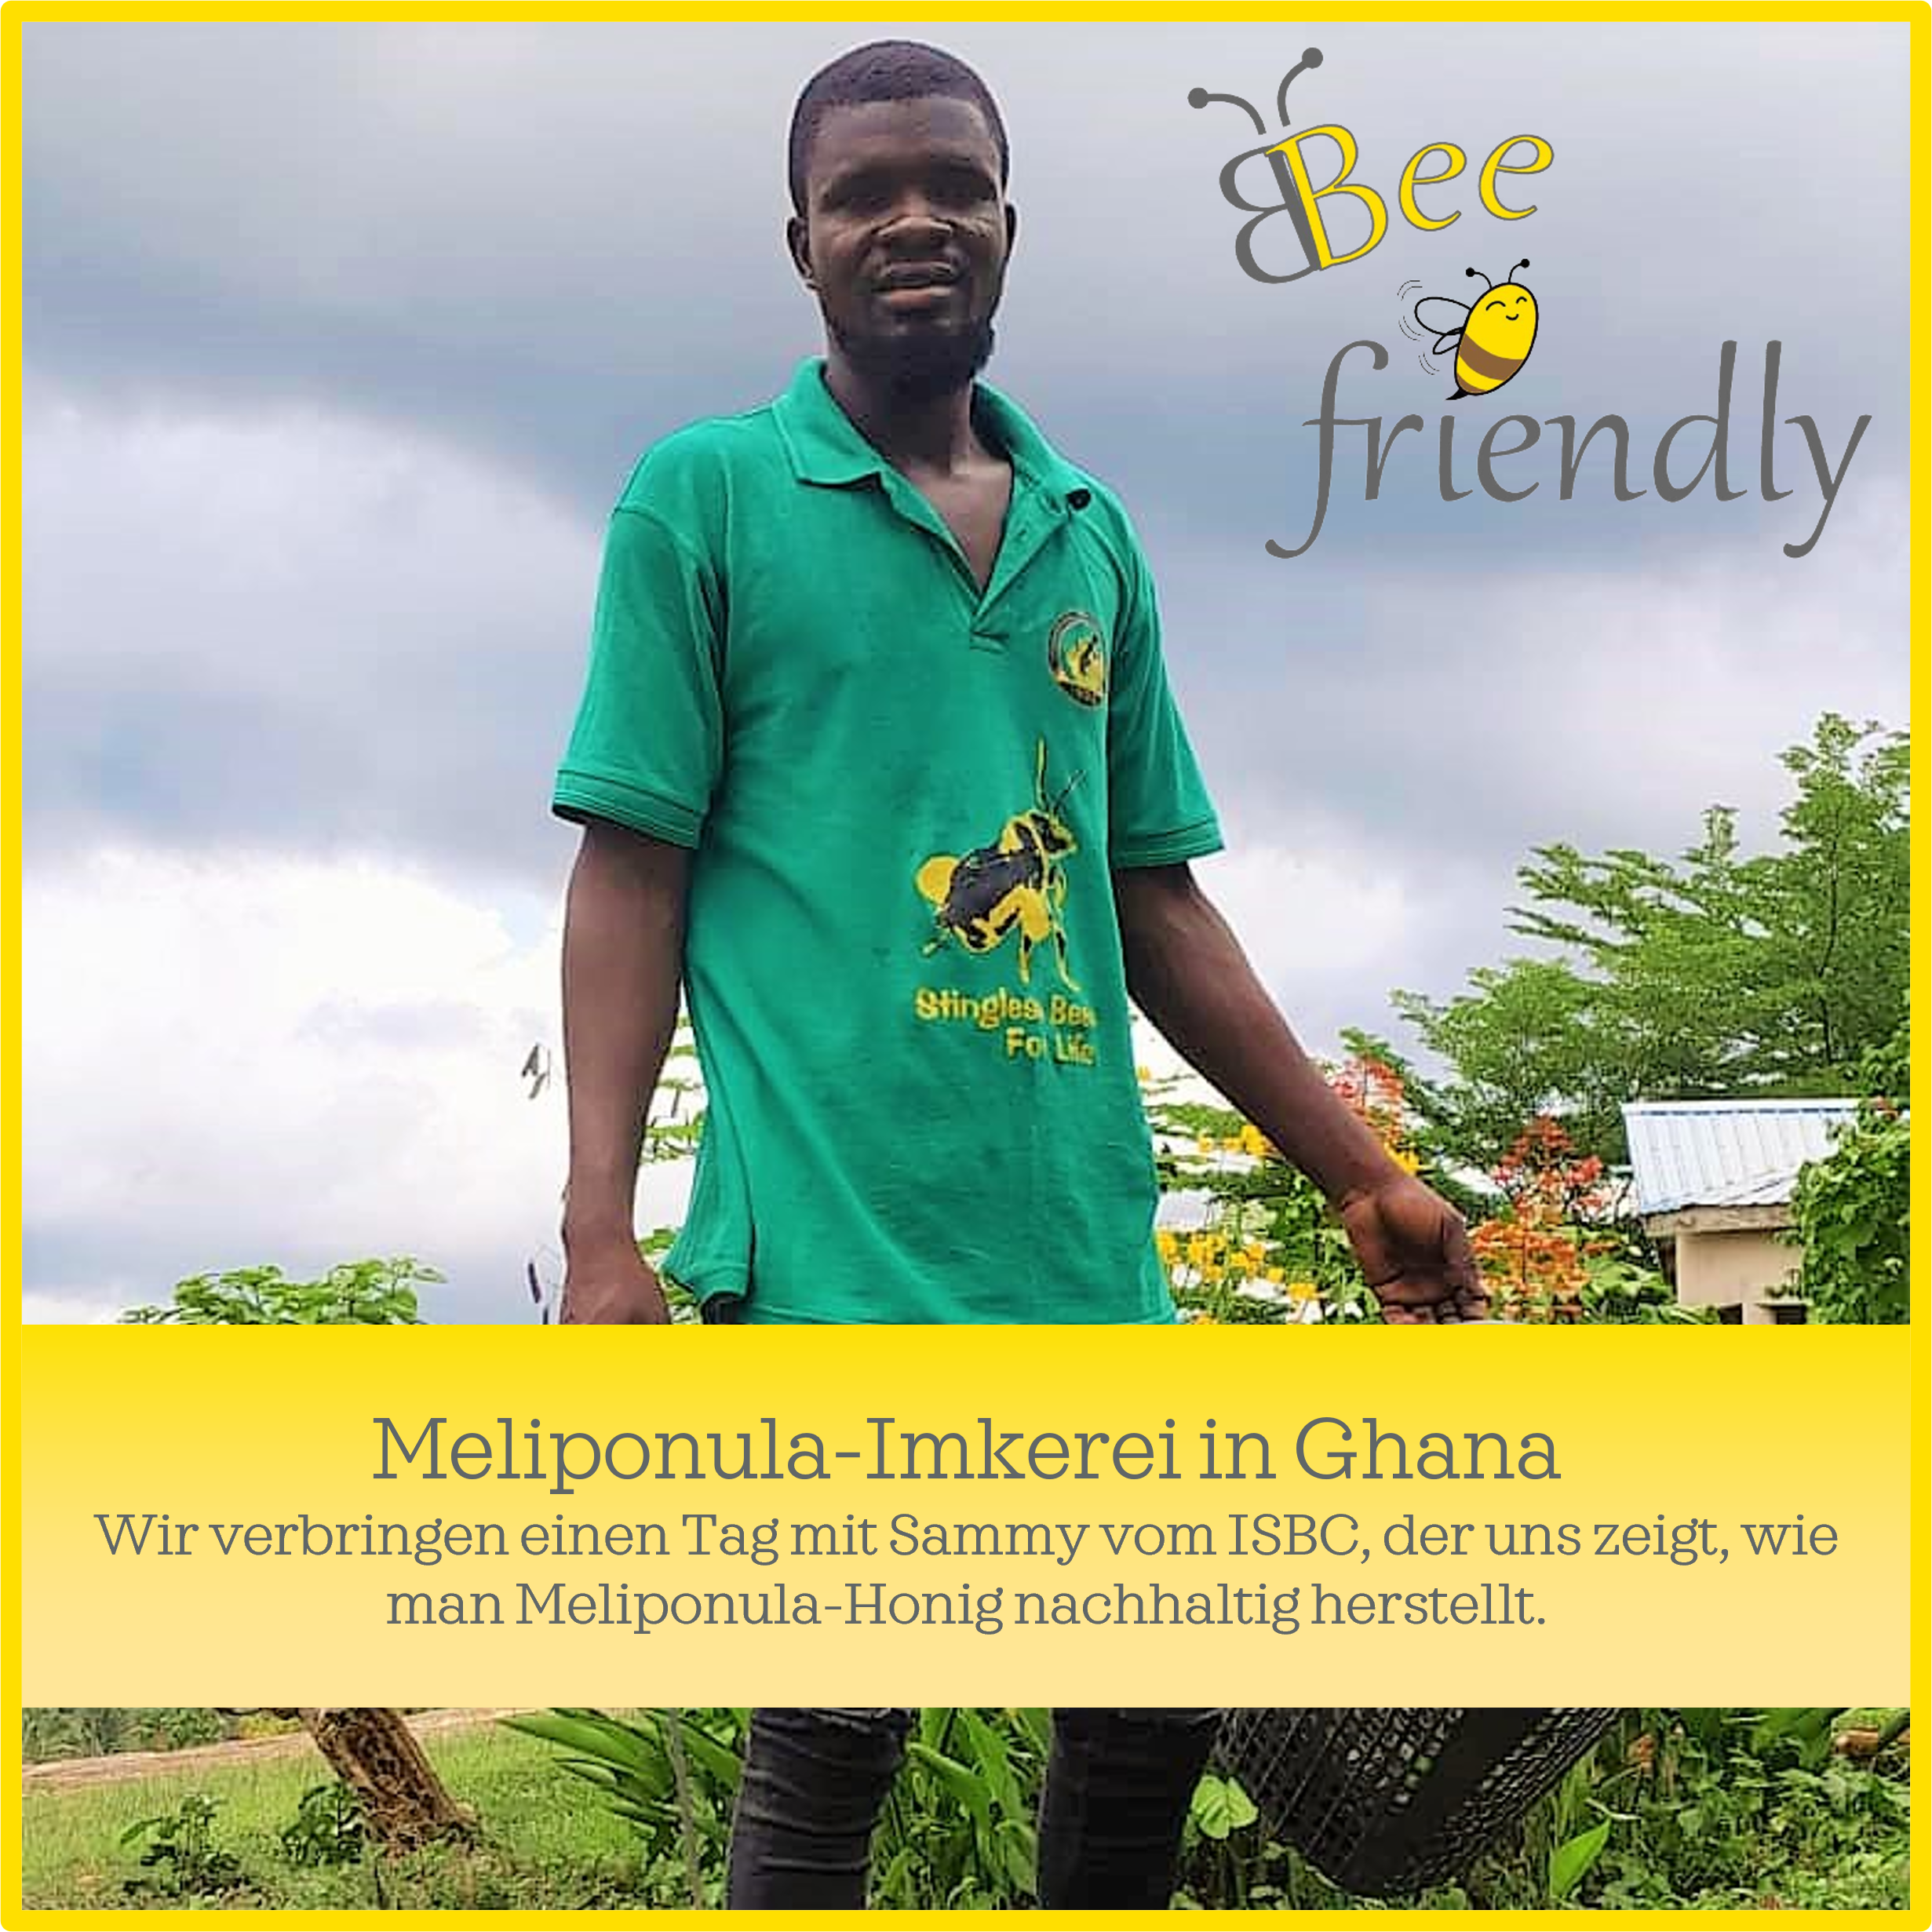 Meliponula-Imkerei in Ghana